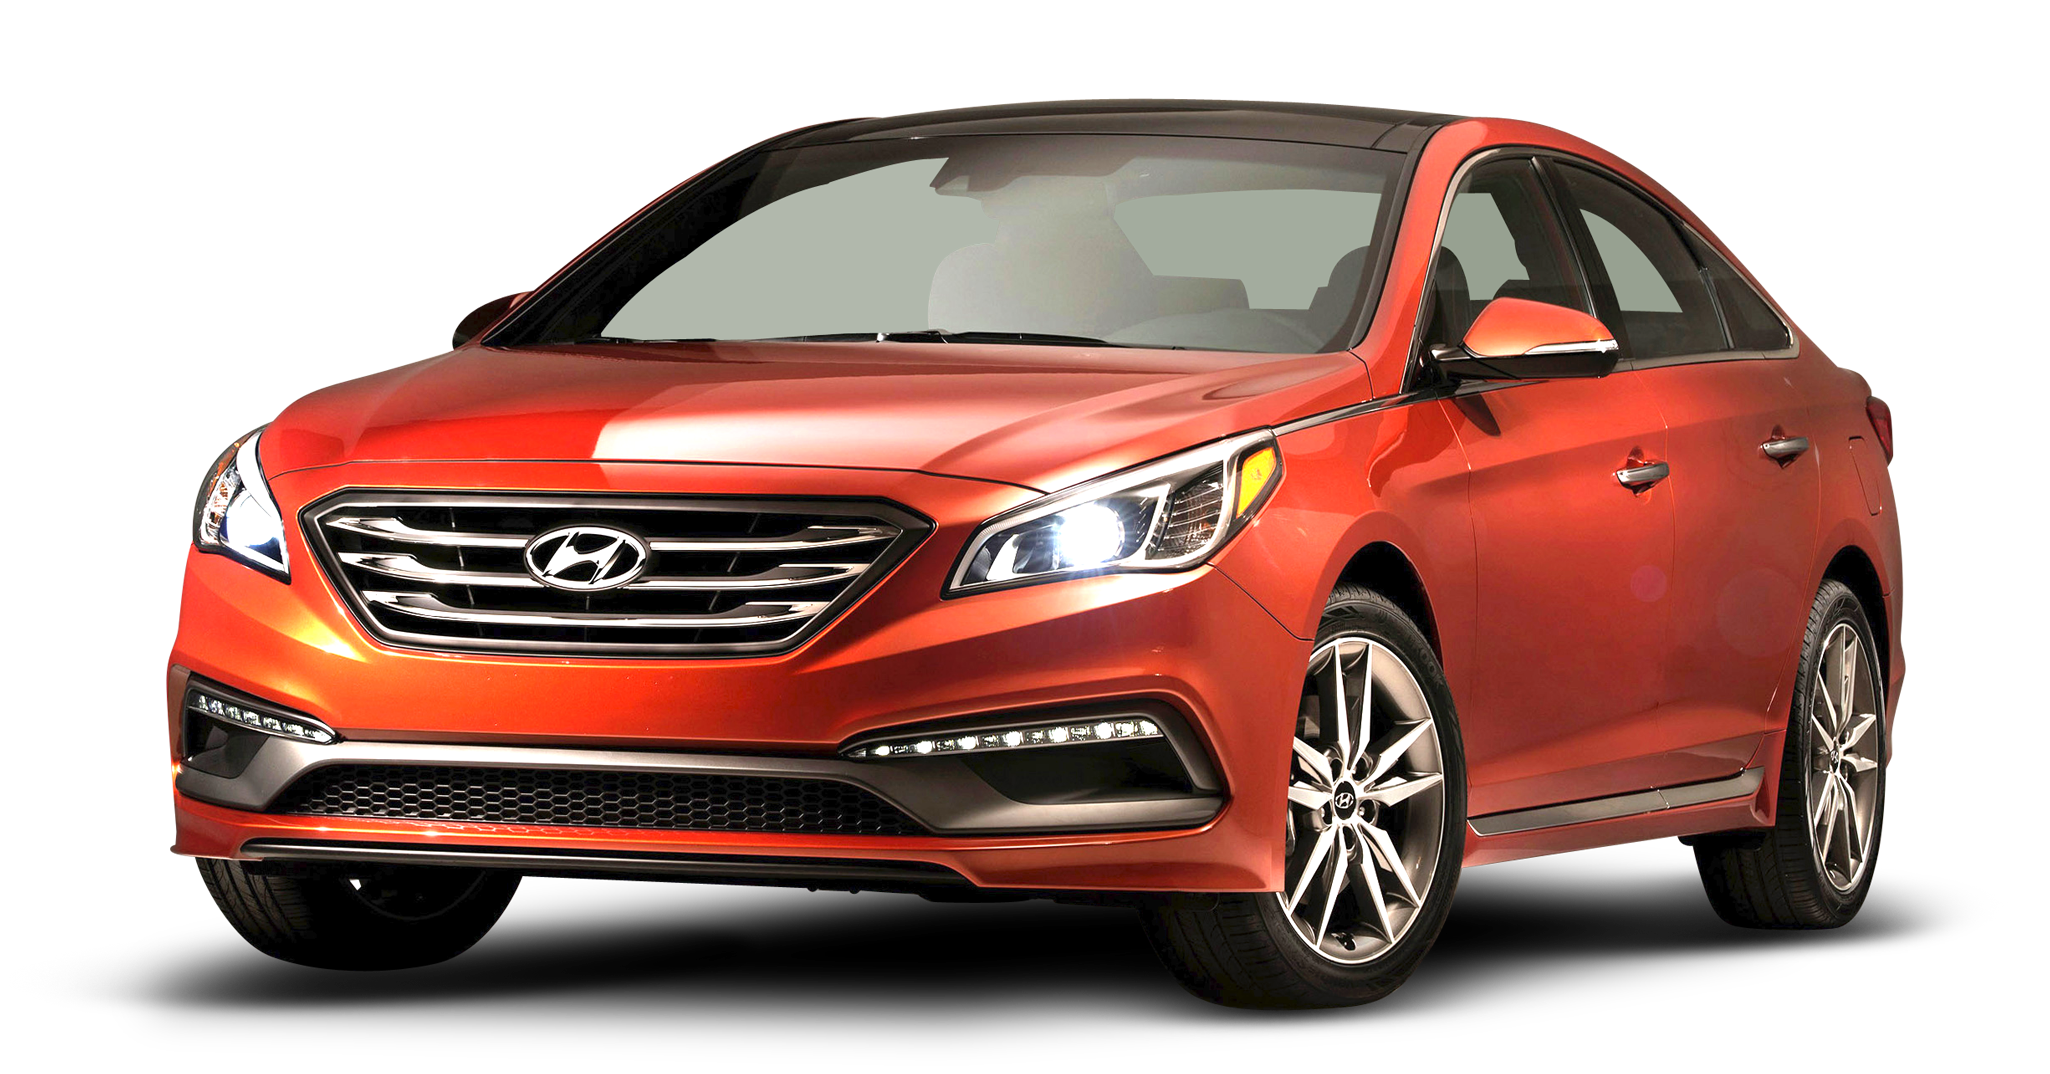 Download Hyundai Sonata Red Car Png Image For Free